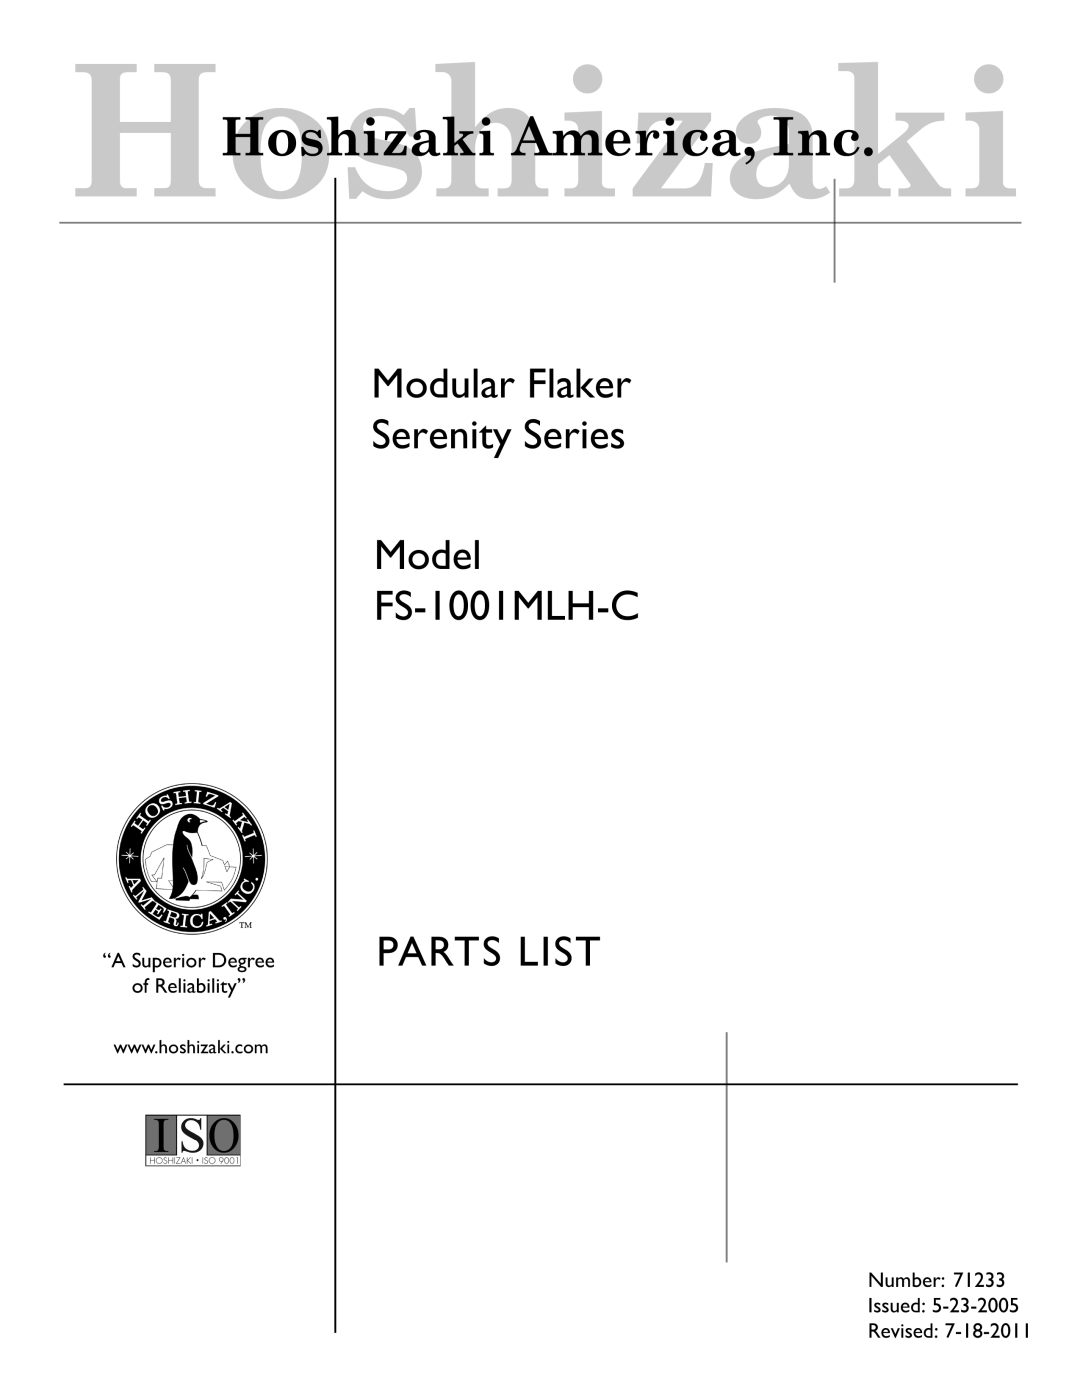 Hoshizaki manual Modular Flaker Serenity Series Model FS-1001MLH-C, Parts List, “A Superior Degree of Reliability” 